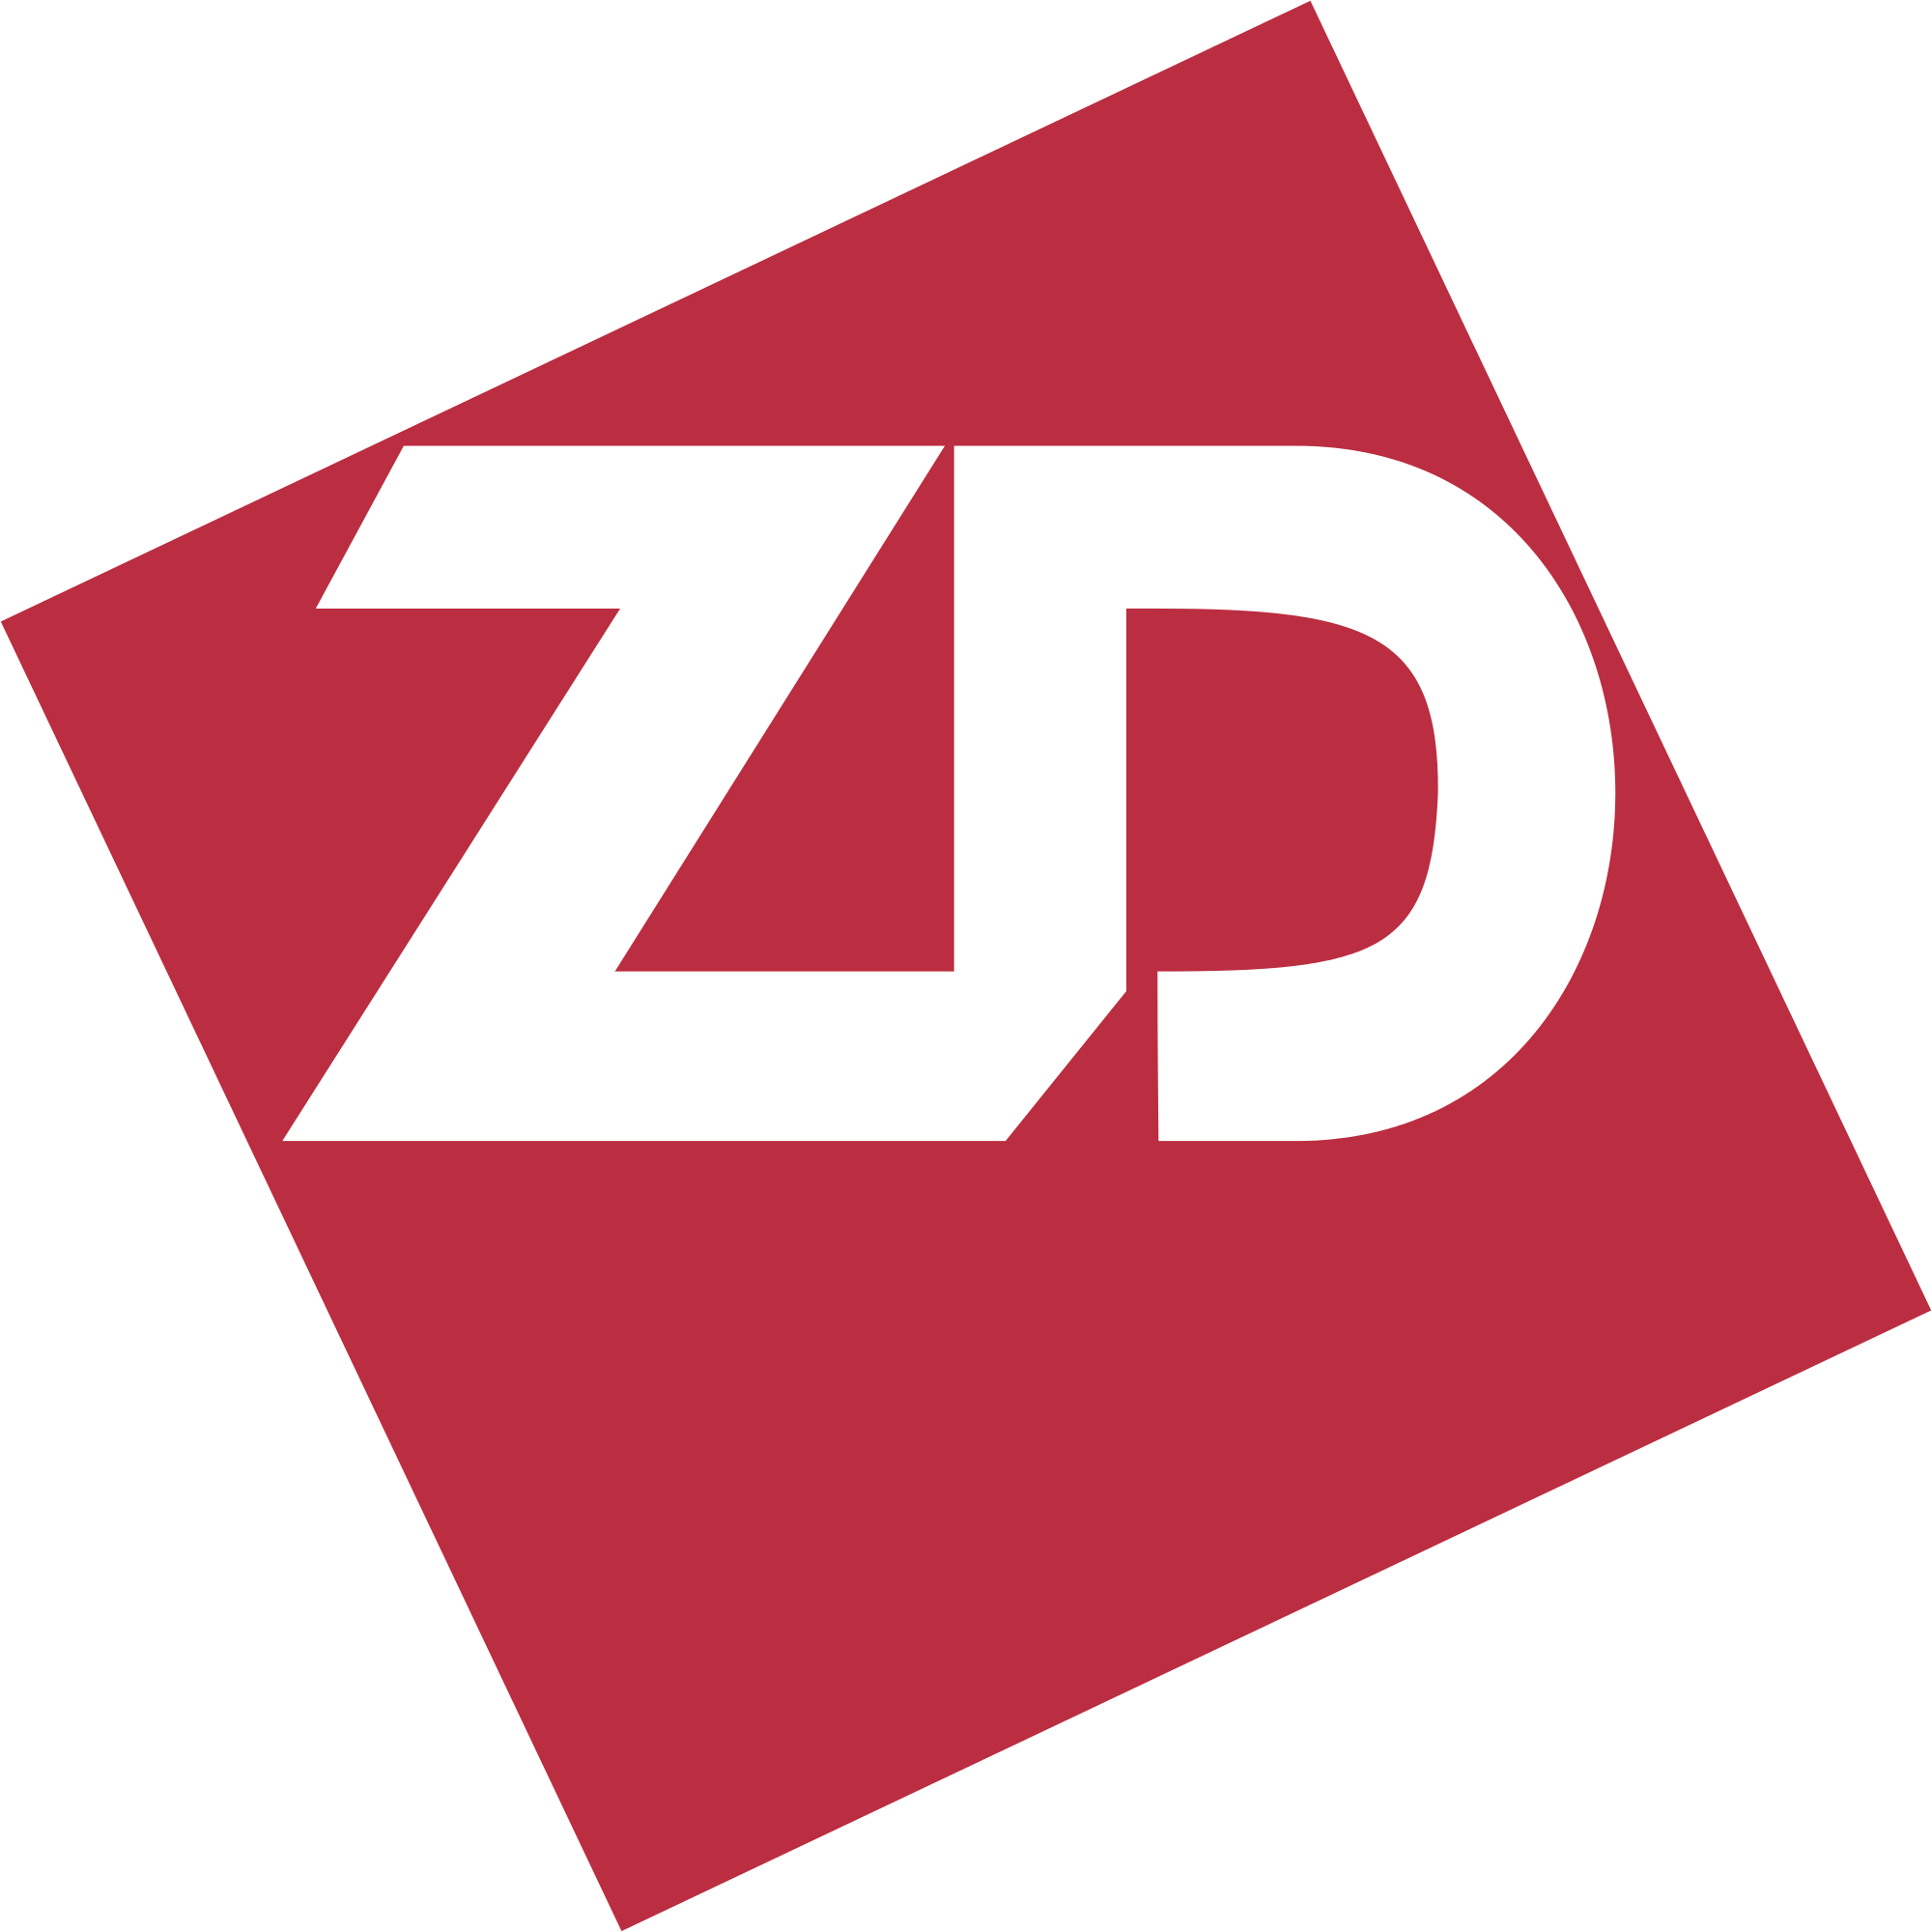 ZD Logo - Ziff Davis ZD Logo.svg